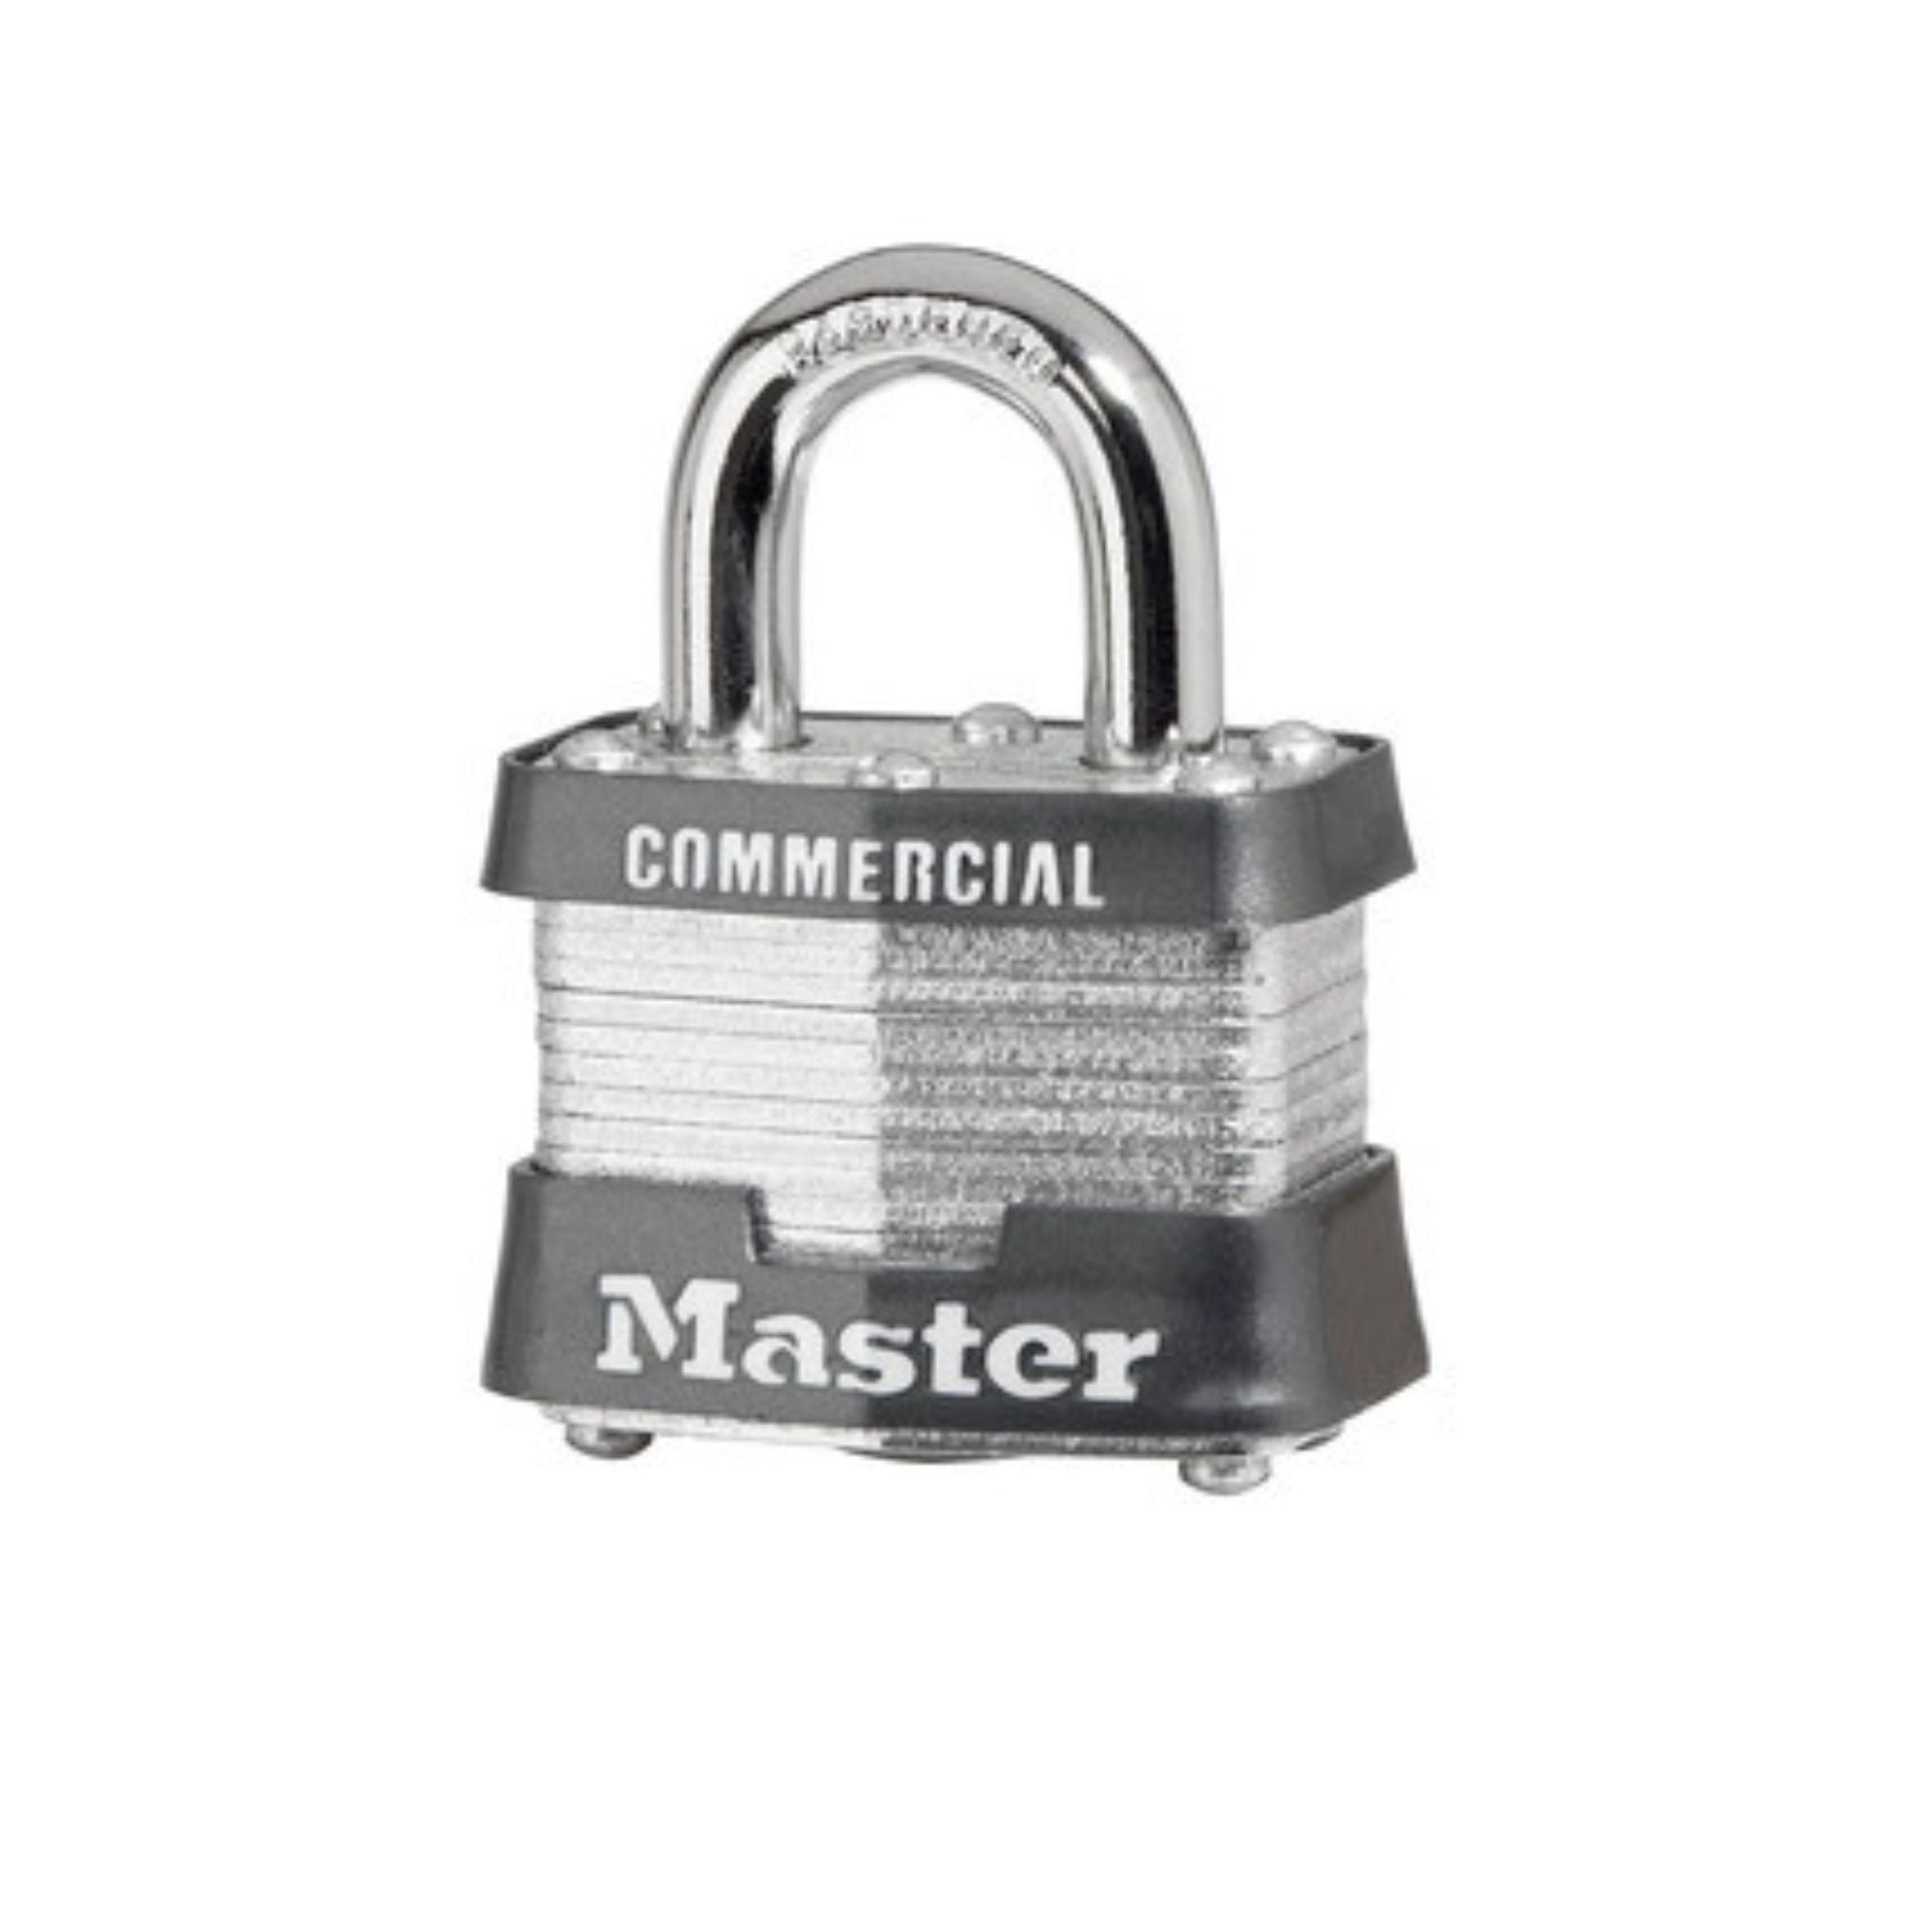 Master Lock 3KA 0301 Lock Laminated steel No. 3 Series Padlock Keyed to Match Existing Key Number KA0301 - The Lock Source